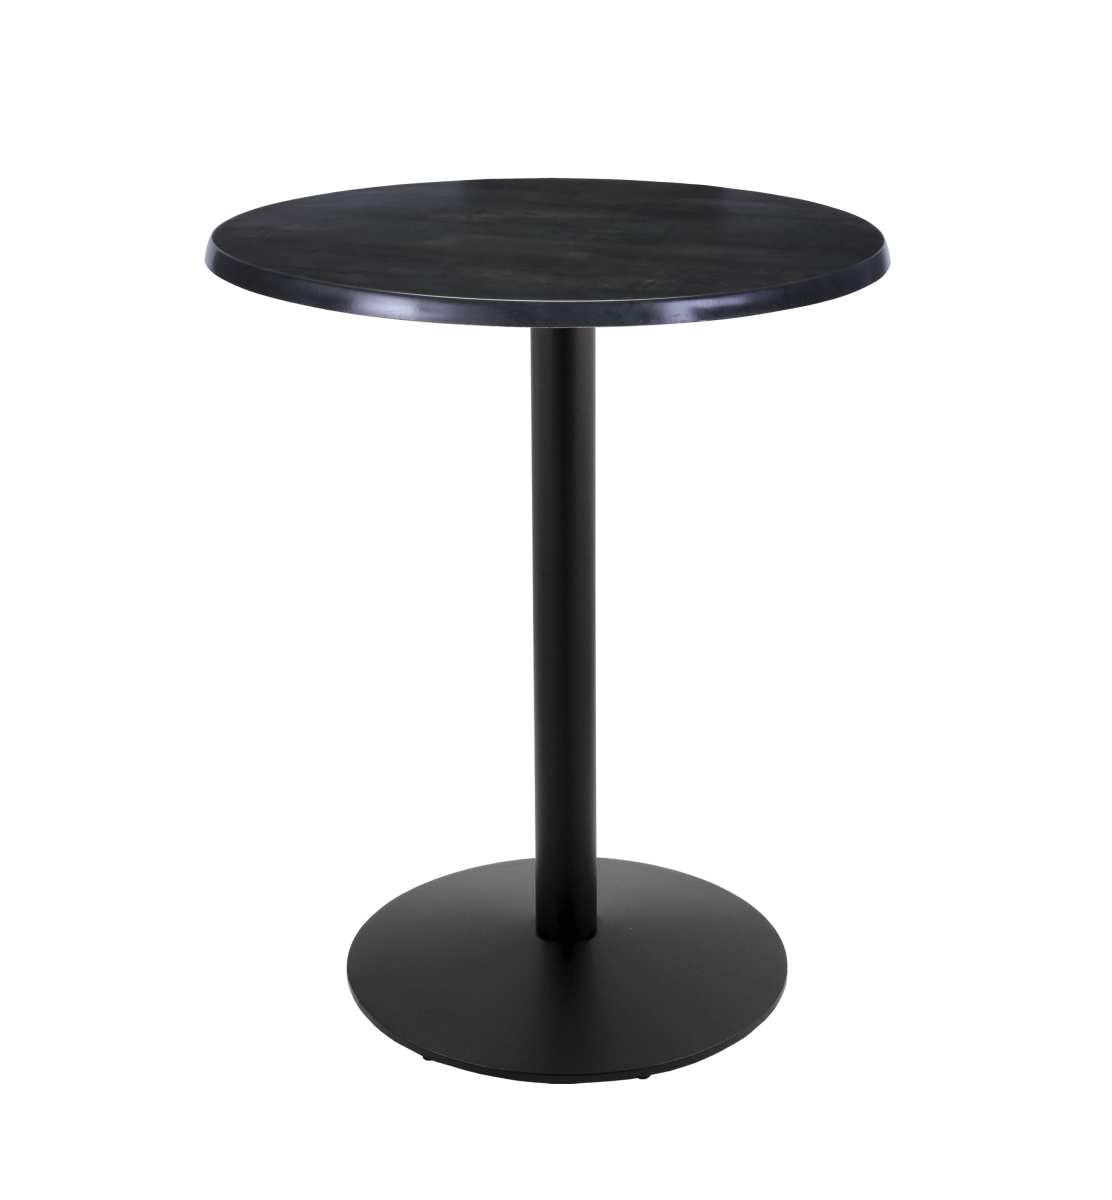 Od214-2242bwod30rblkstl 42 In. Black Table With 30 In. Diameter Indoor & Outdoor Black Steel Round Top